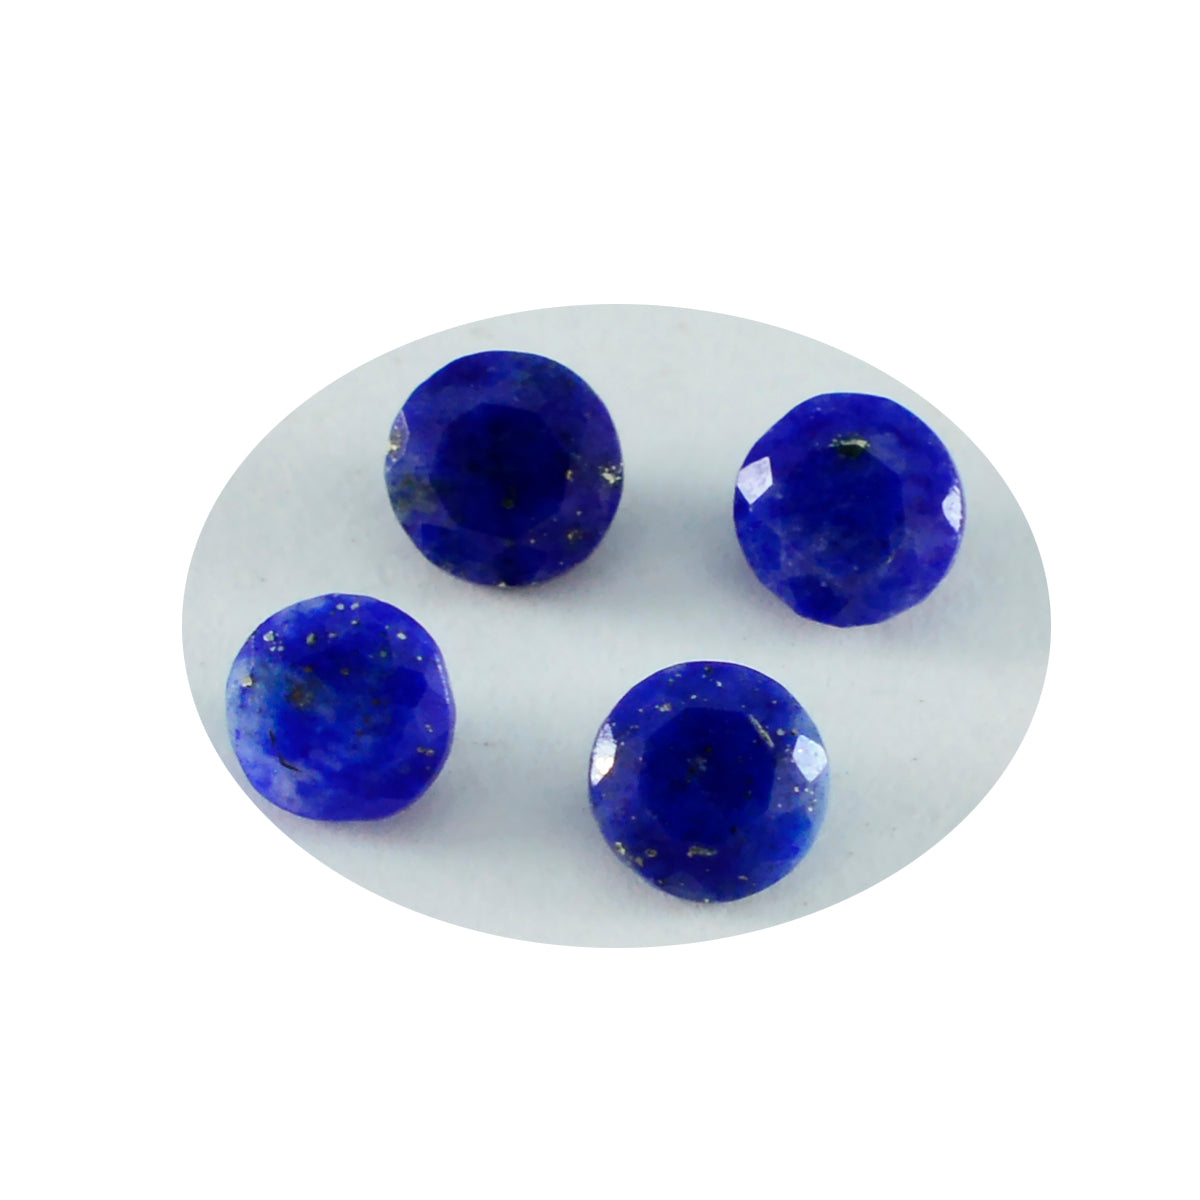 Riyogems 1PC Natural Blue Lapis Lazuli Faceted 9x9 mm Round Shape A+ Quality Loose Stone